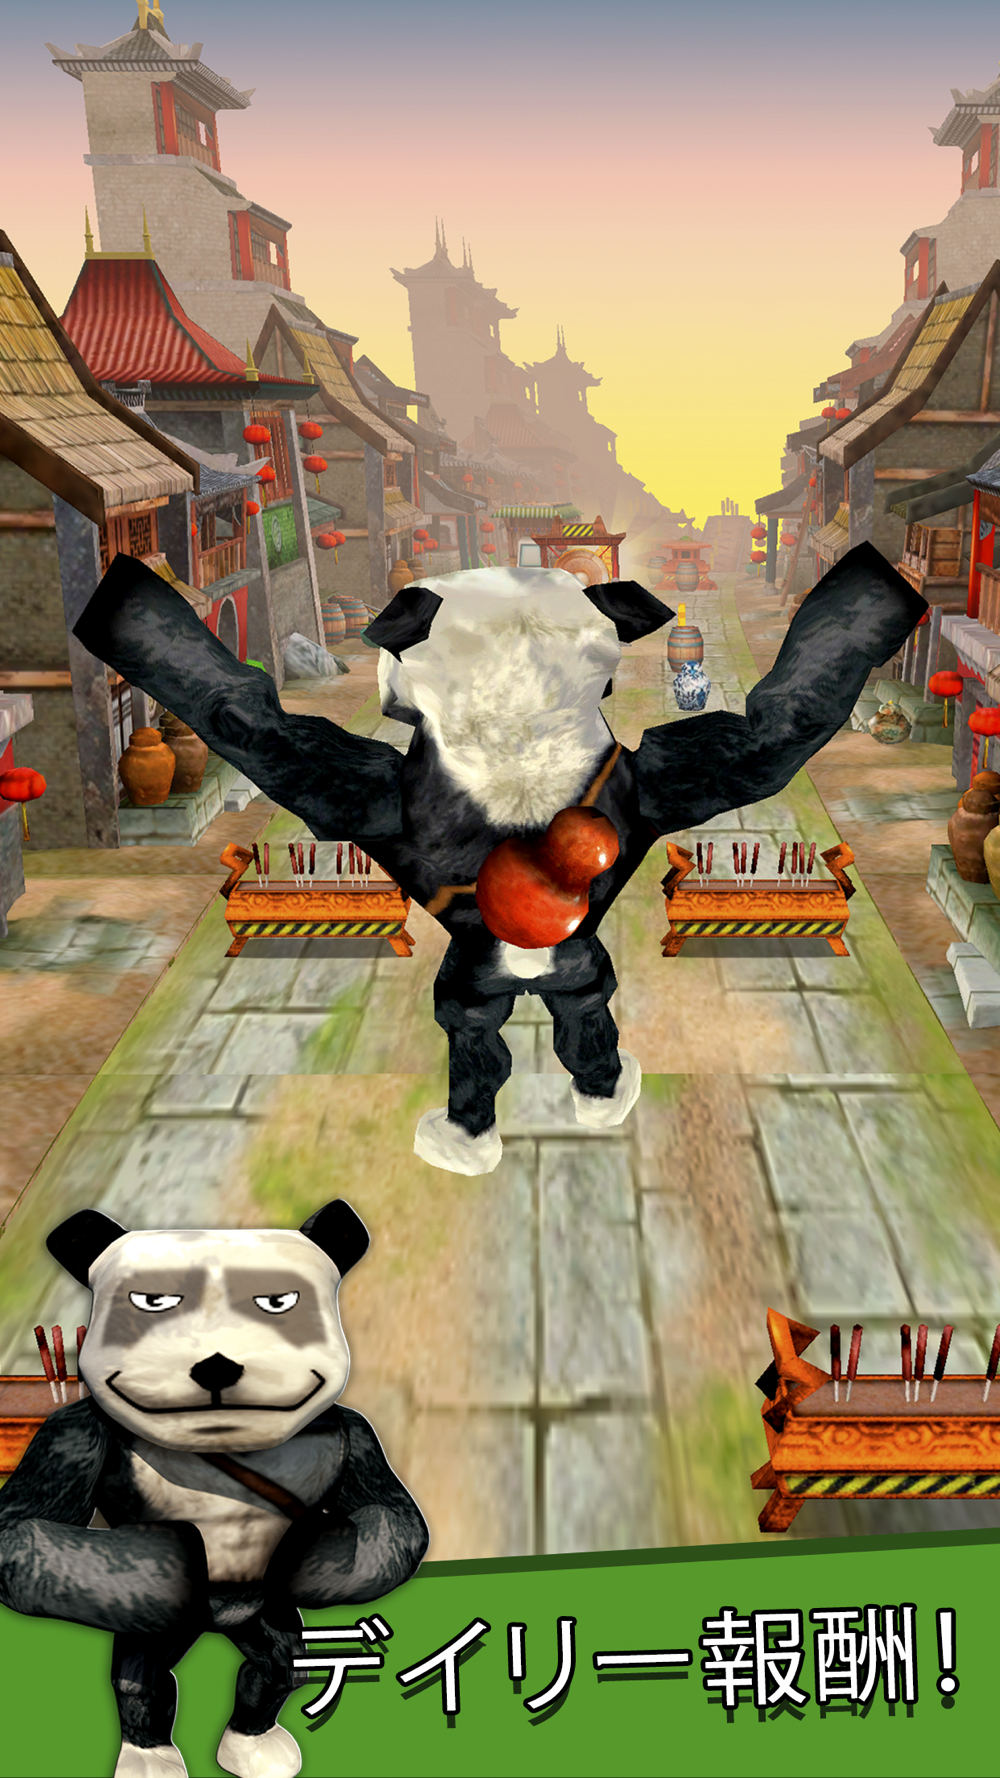 Cartoon Panda Run 漫画のパンダレースゲーム 子供のための無料 Free Download App For Iphone Steprimo Com